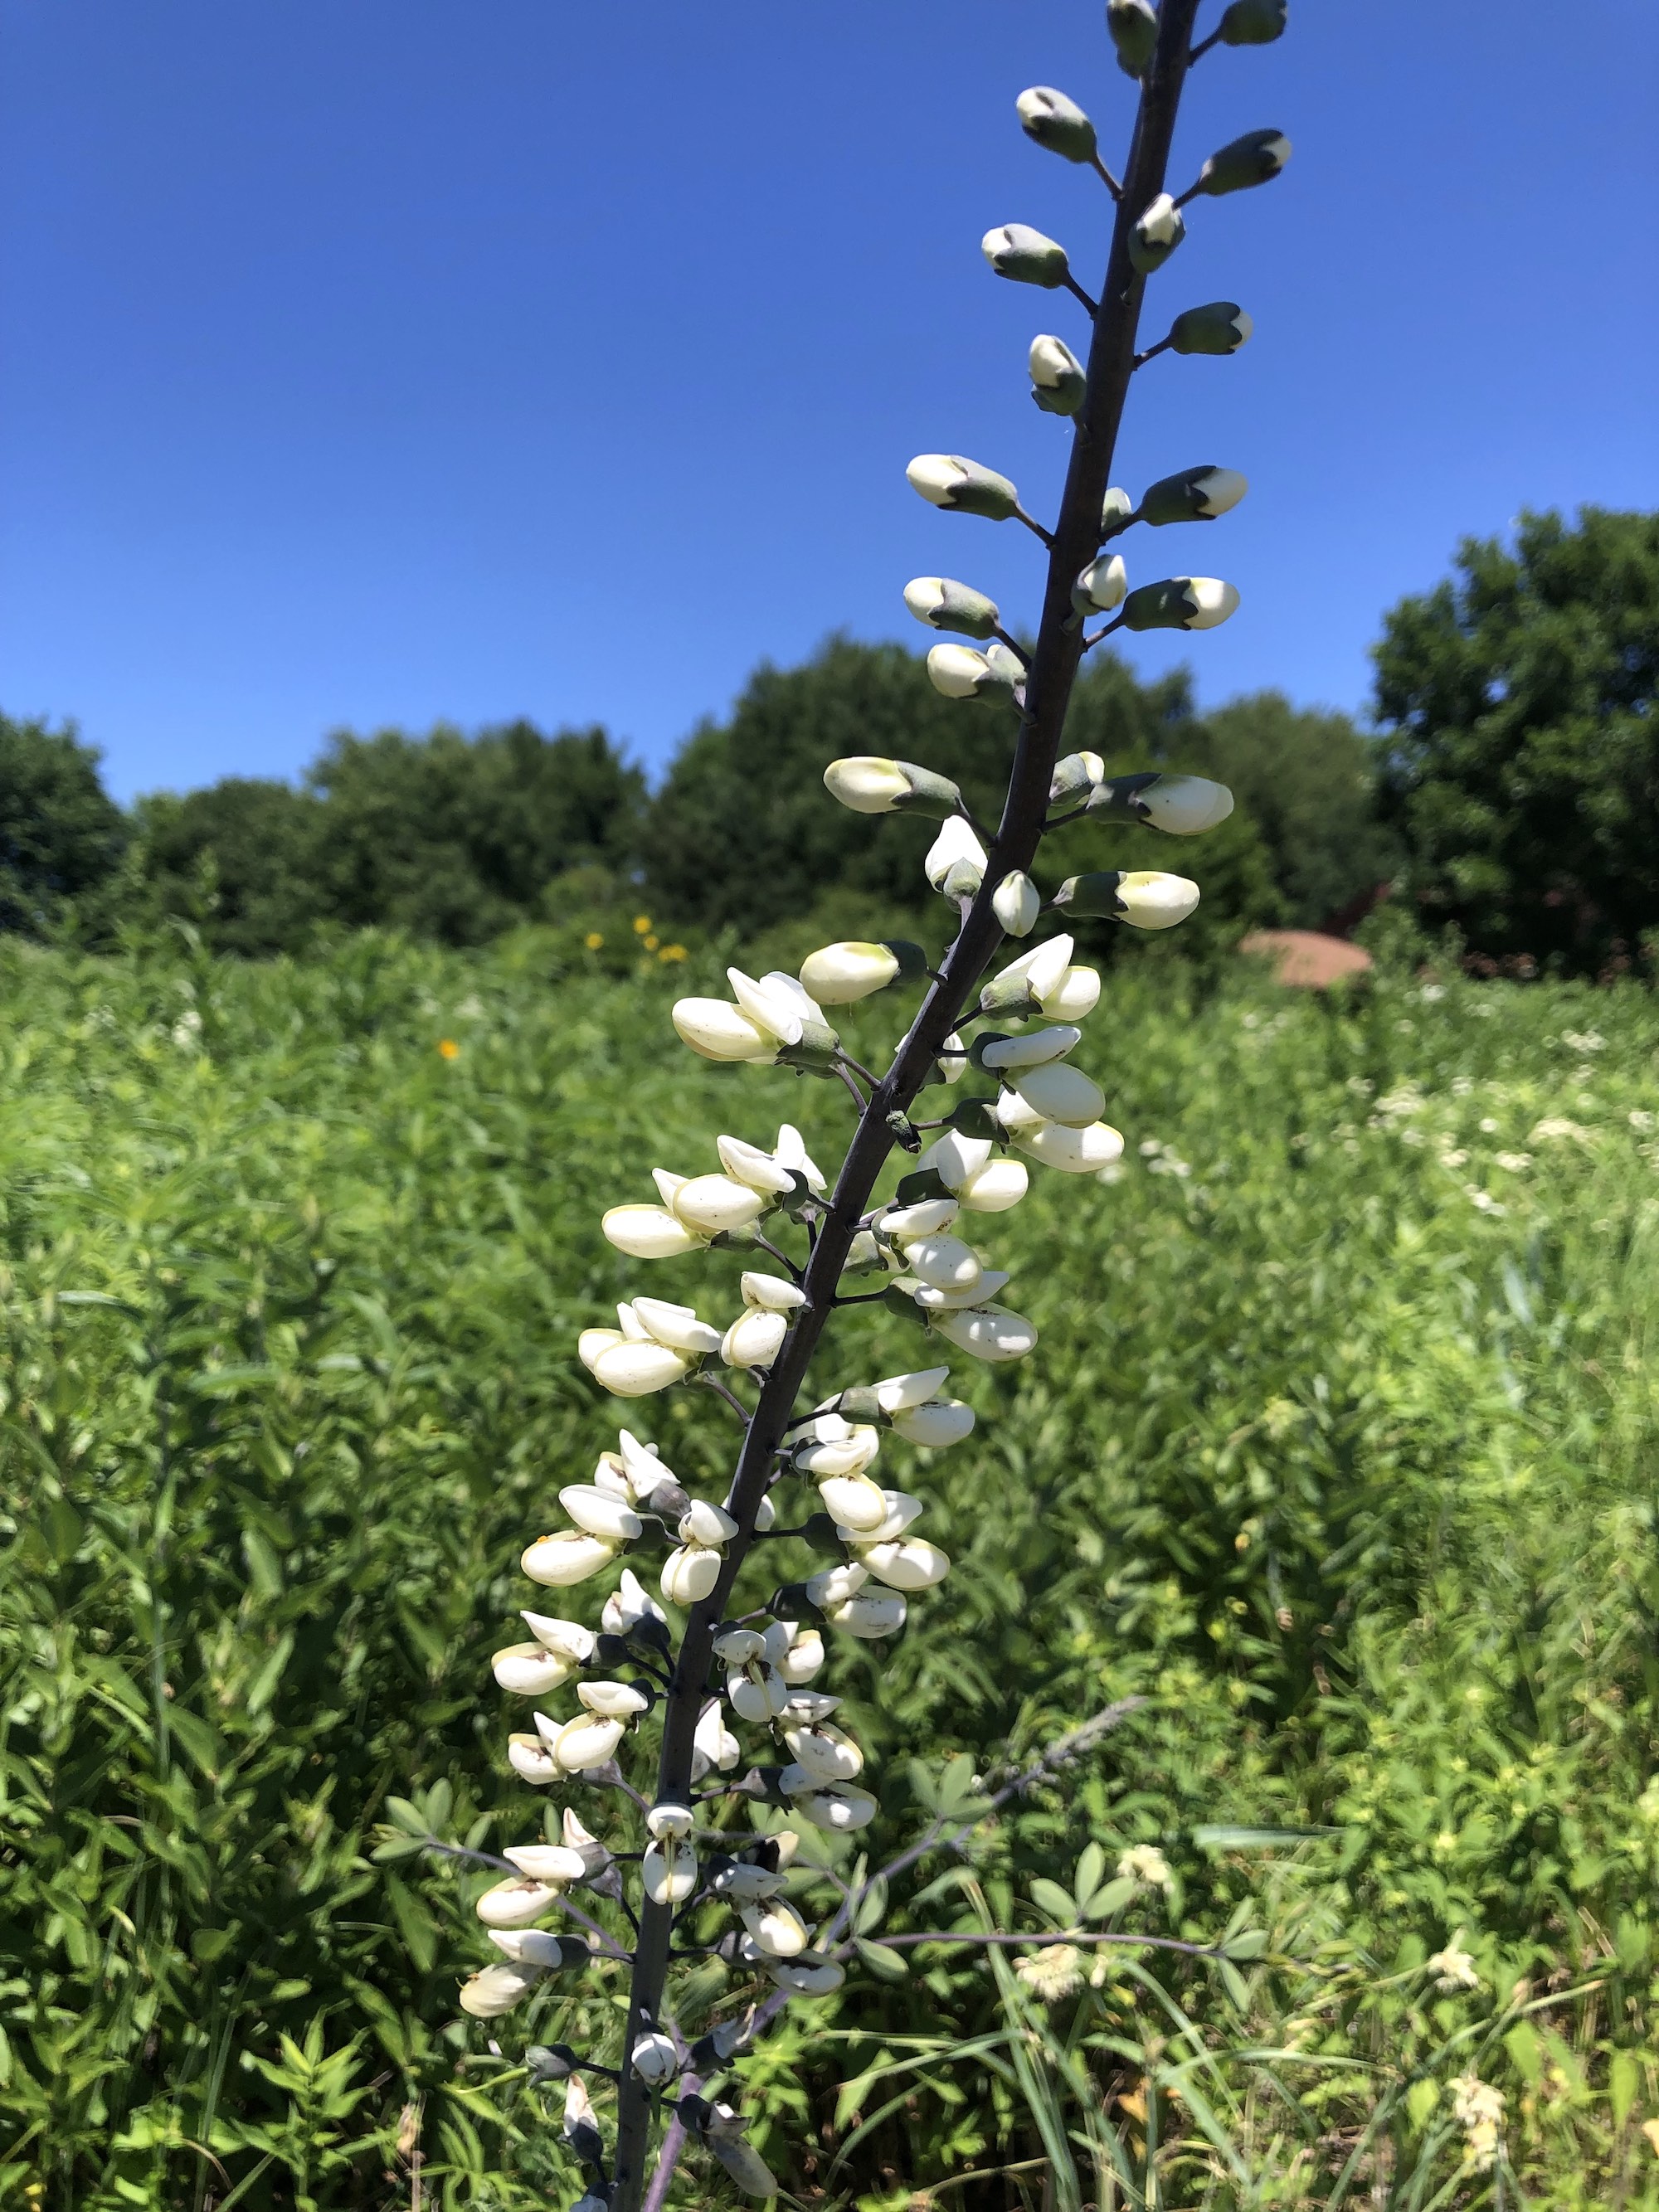 White Wild Indigo in the UW Arboretum Nature Garden in Madison, Wisconsin on June 19, 2021.